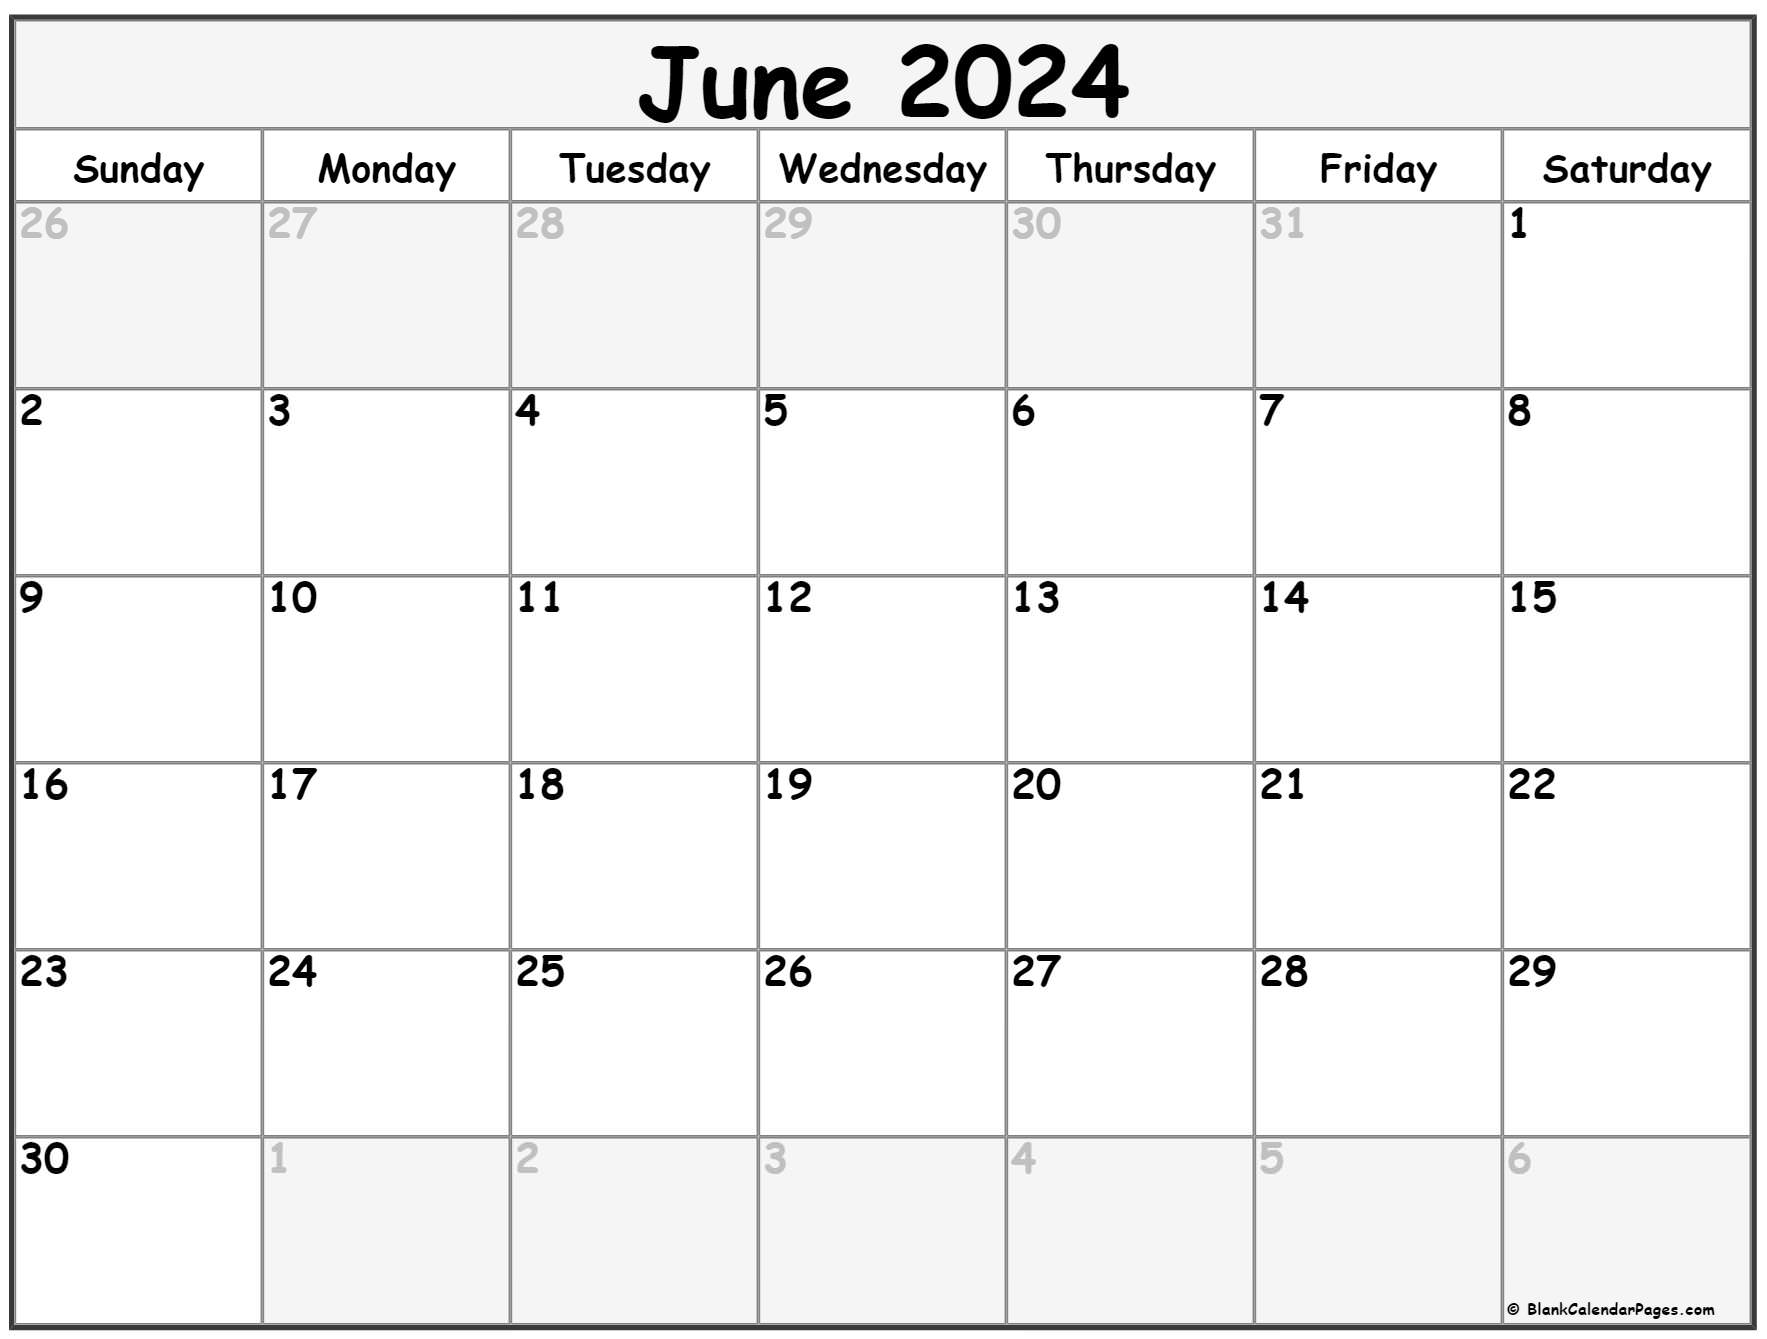 June 2024 Calendar | Free Printable Calendar for Calendar 2024 June Printable